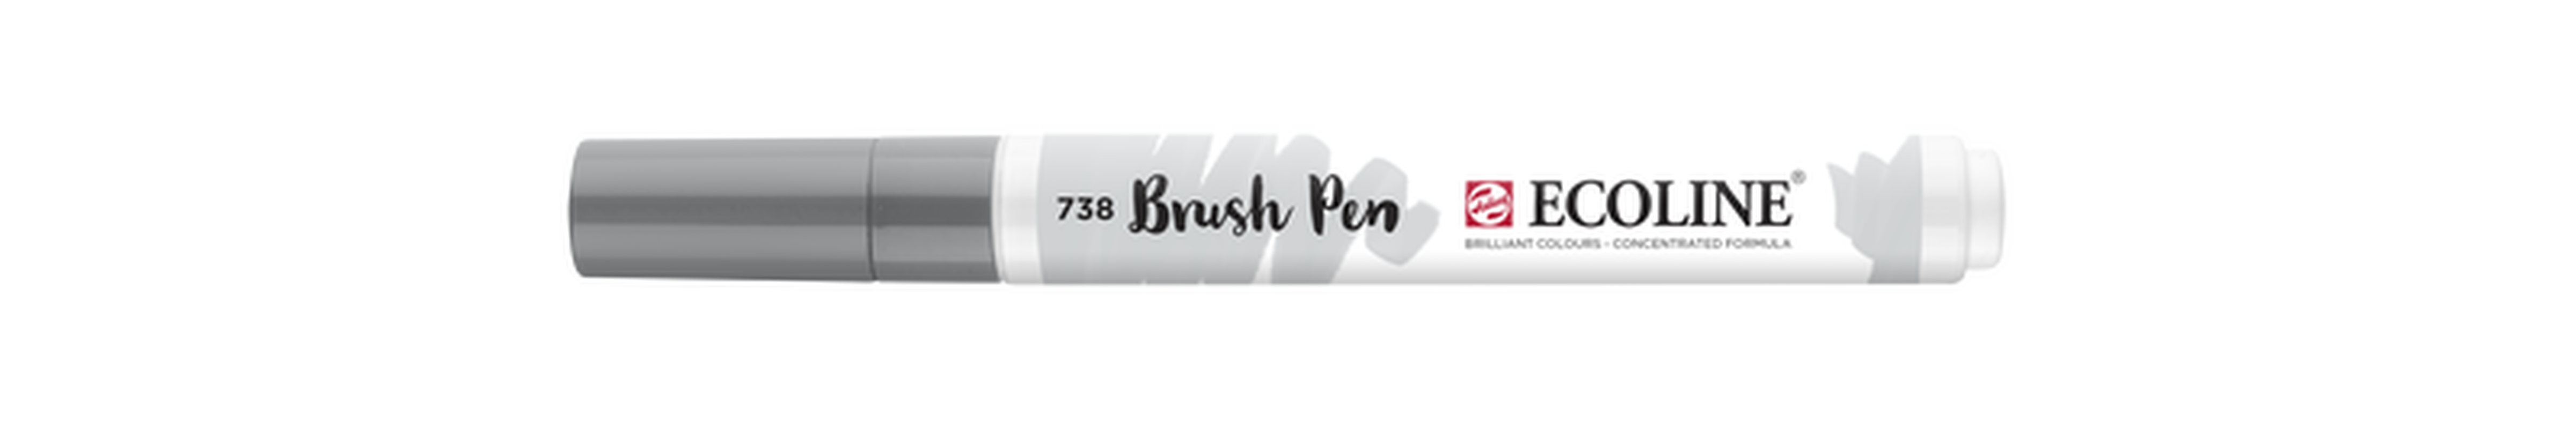 Talens Brush Pen Ecoline Nummer 738 Farbe Light Cool Grey